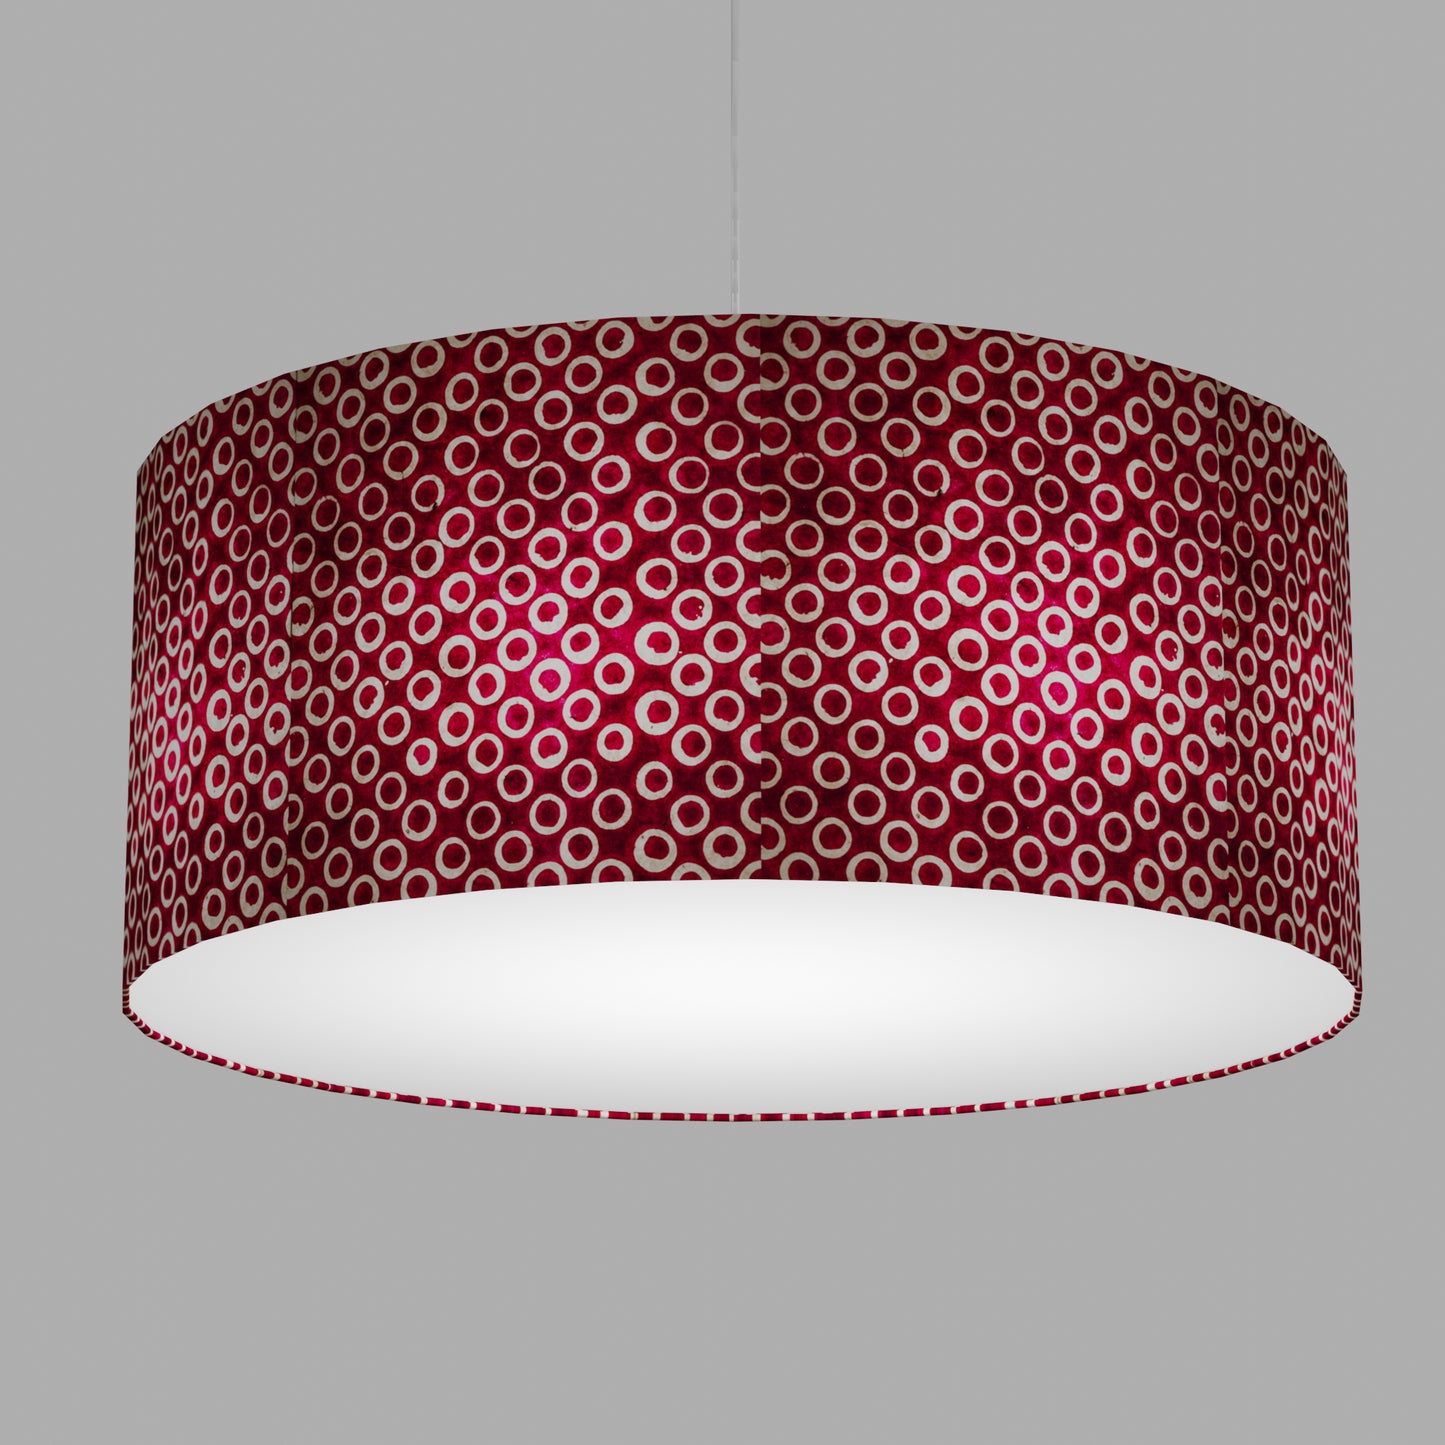 Drum Lamp Shade - P73 - Batik Cranberry Circles, 70cm(d) x 30cm(h)